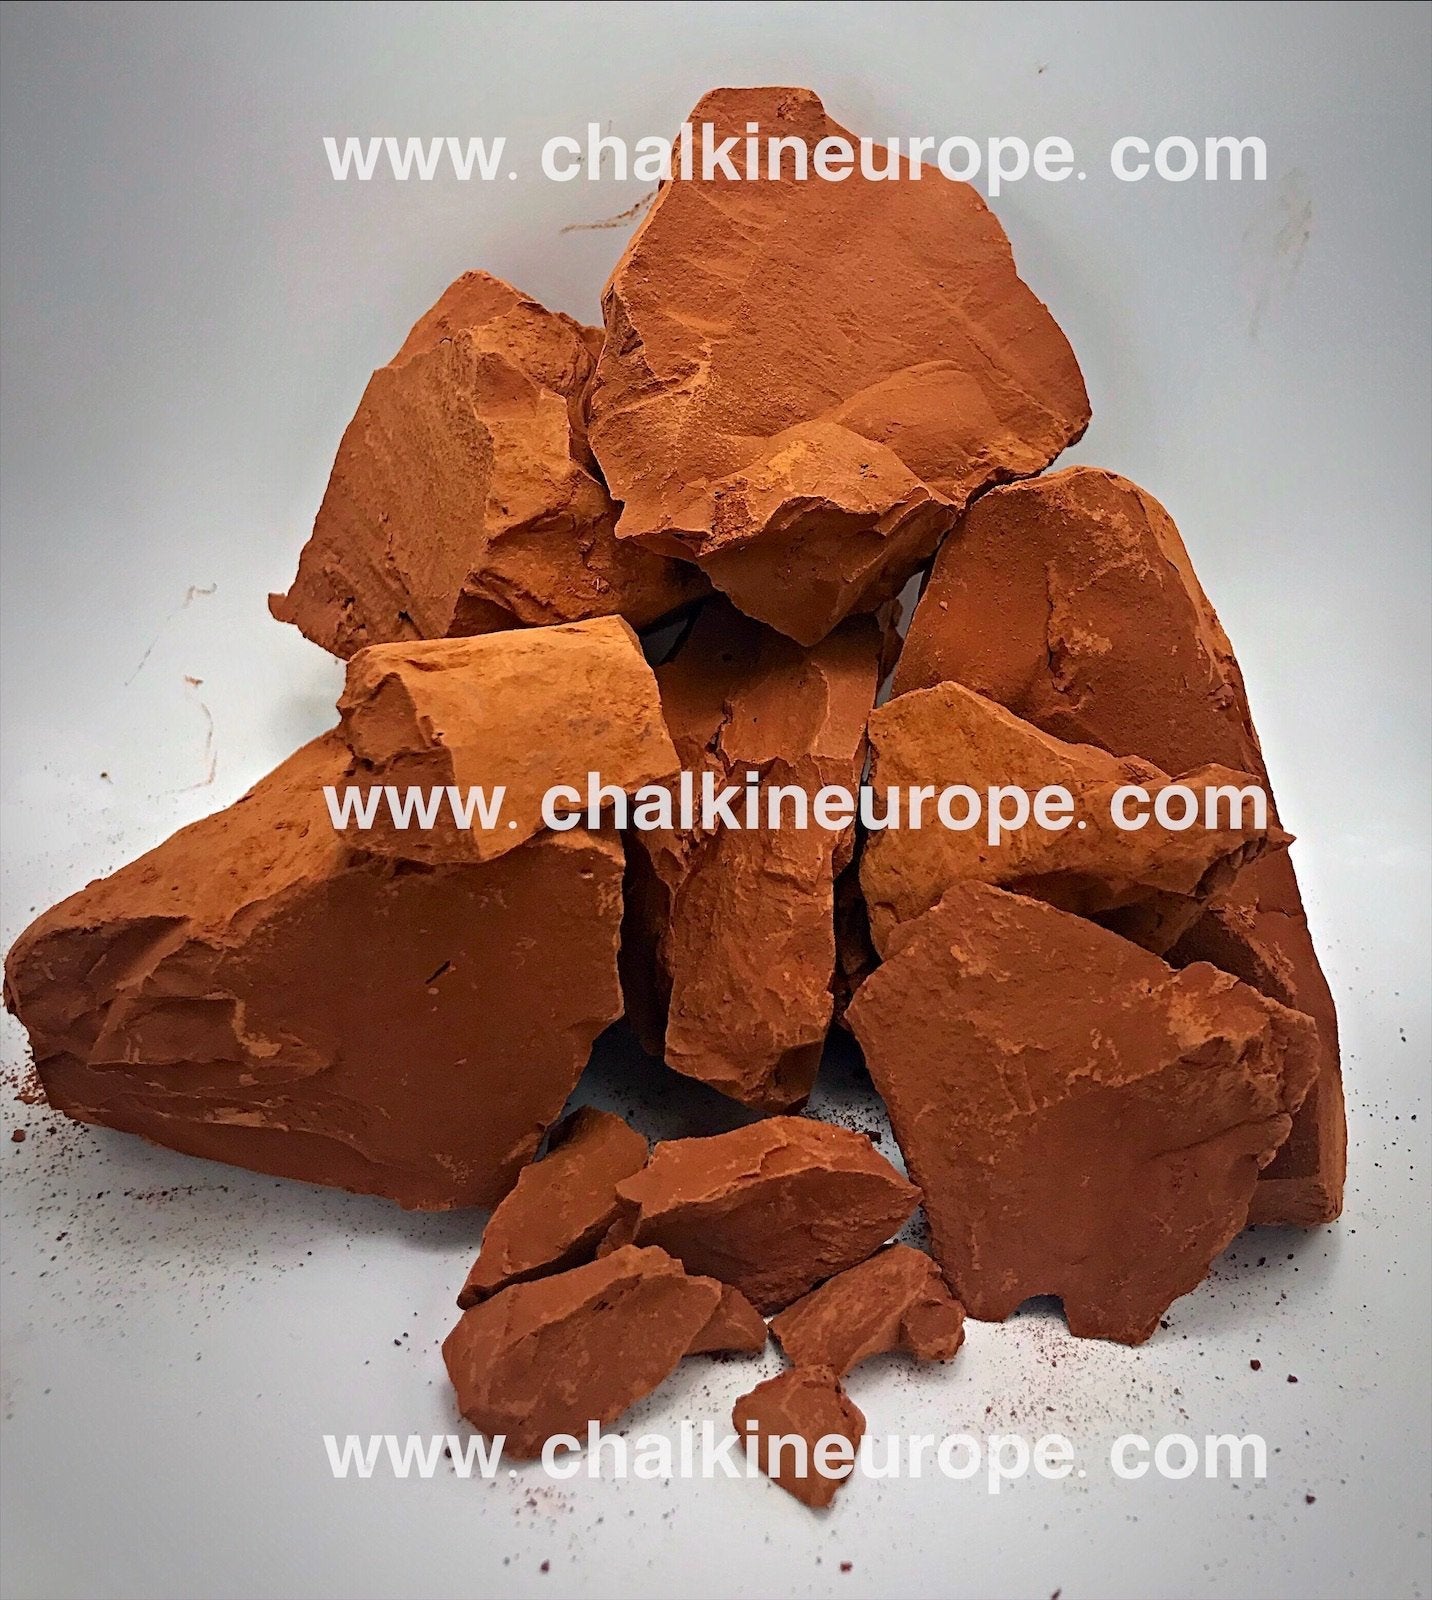 Sarkanā māla gabali - Halkineurope